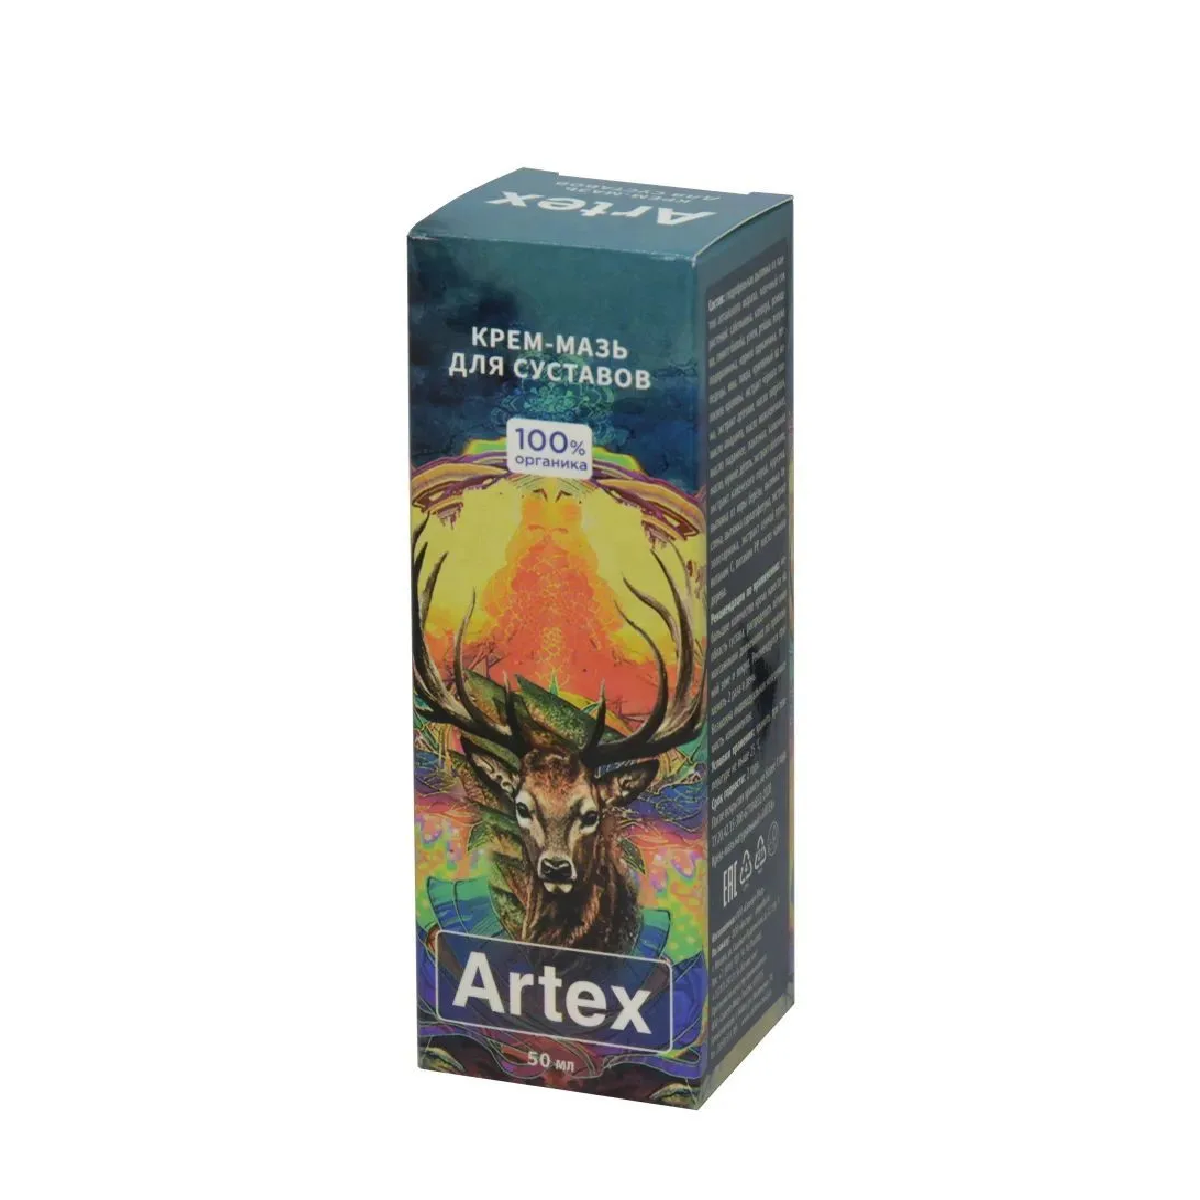 ARTEX крем-мазь для суставов 50 мл.